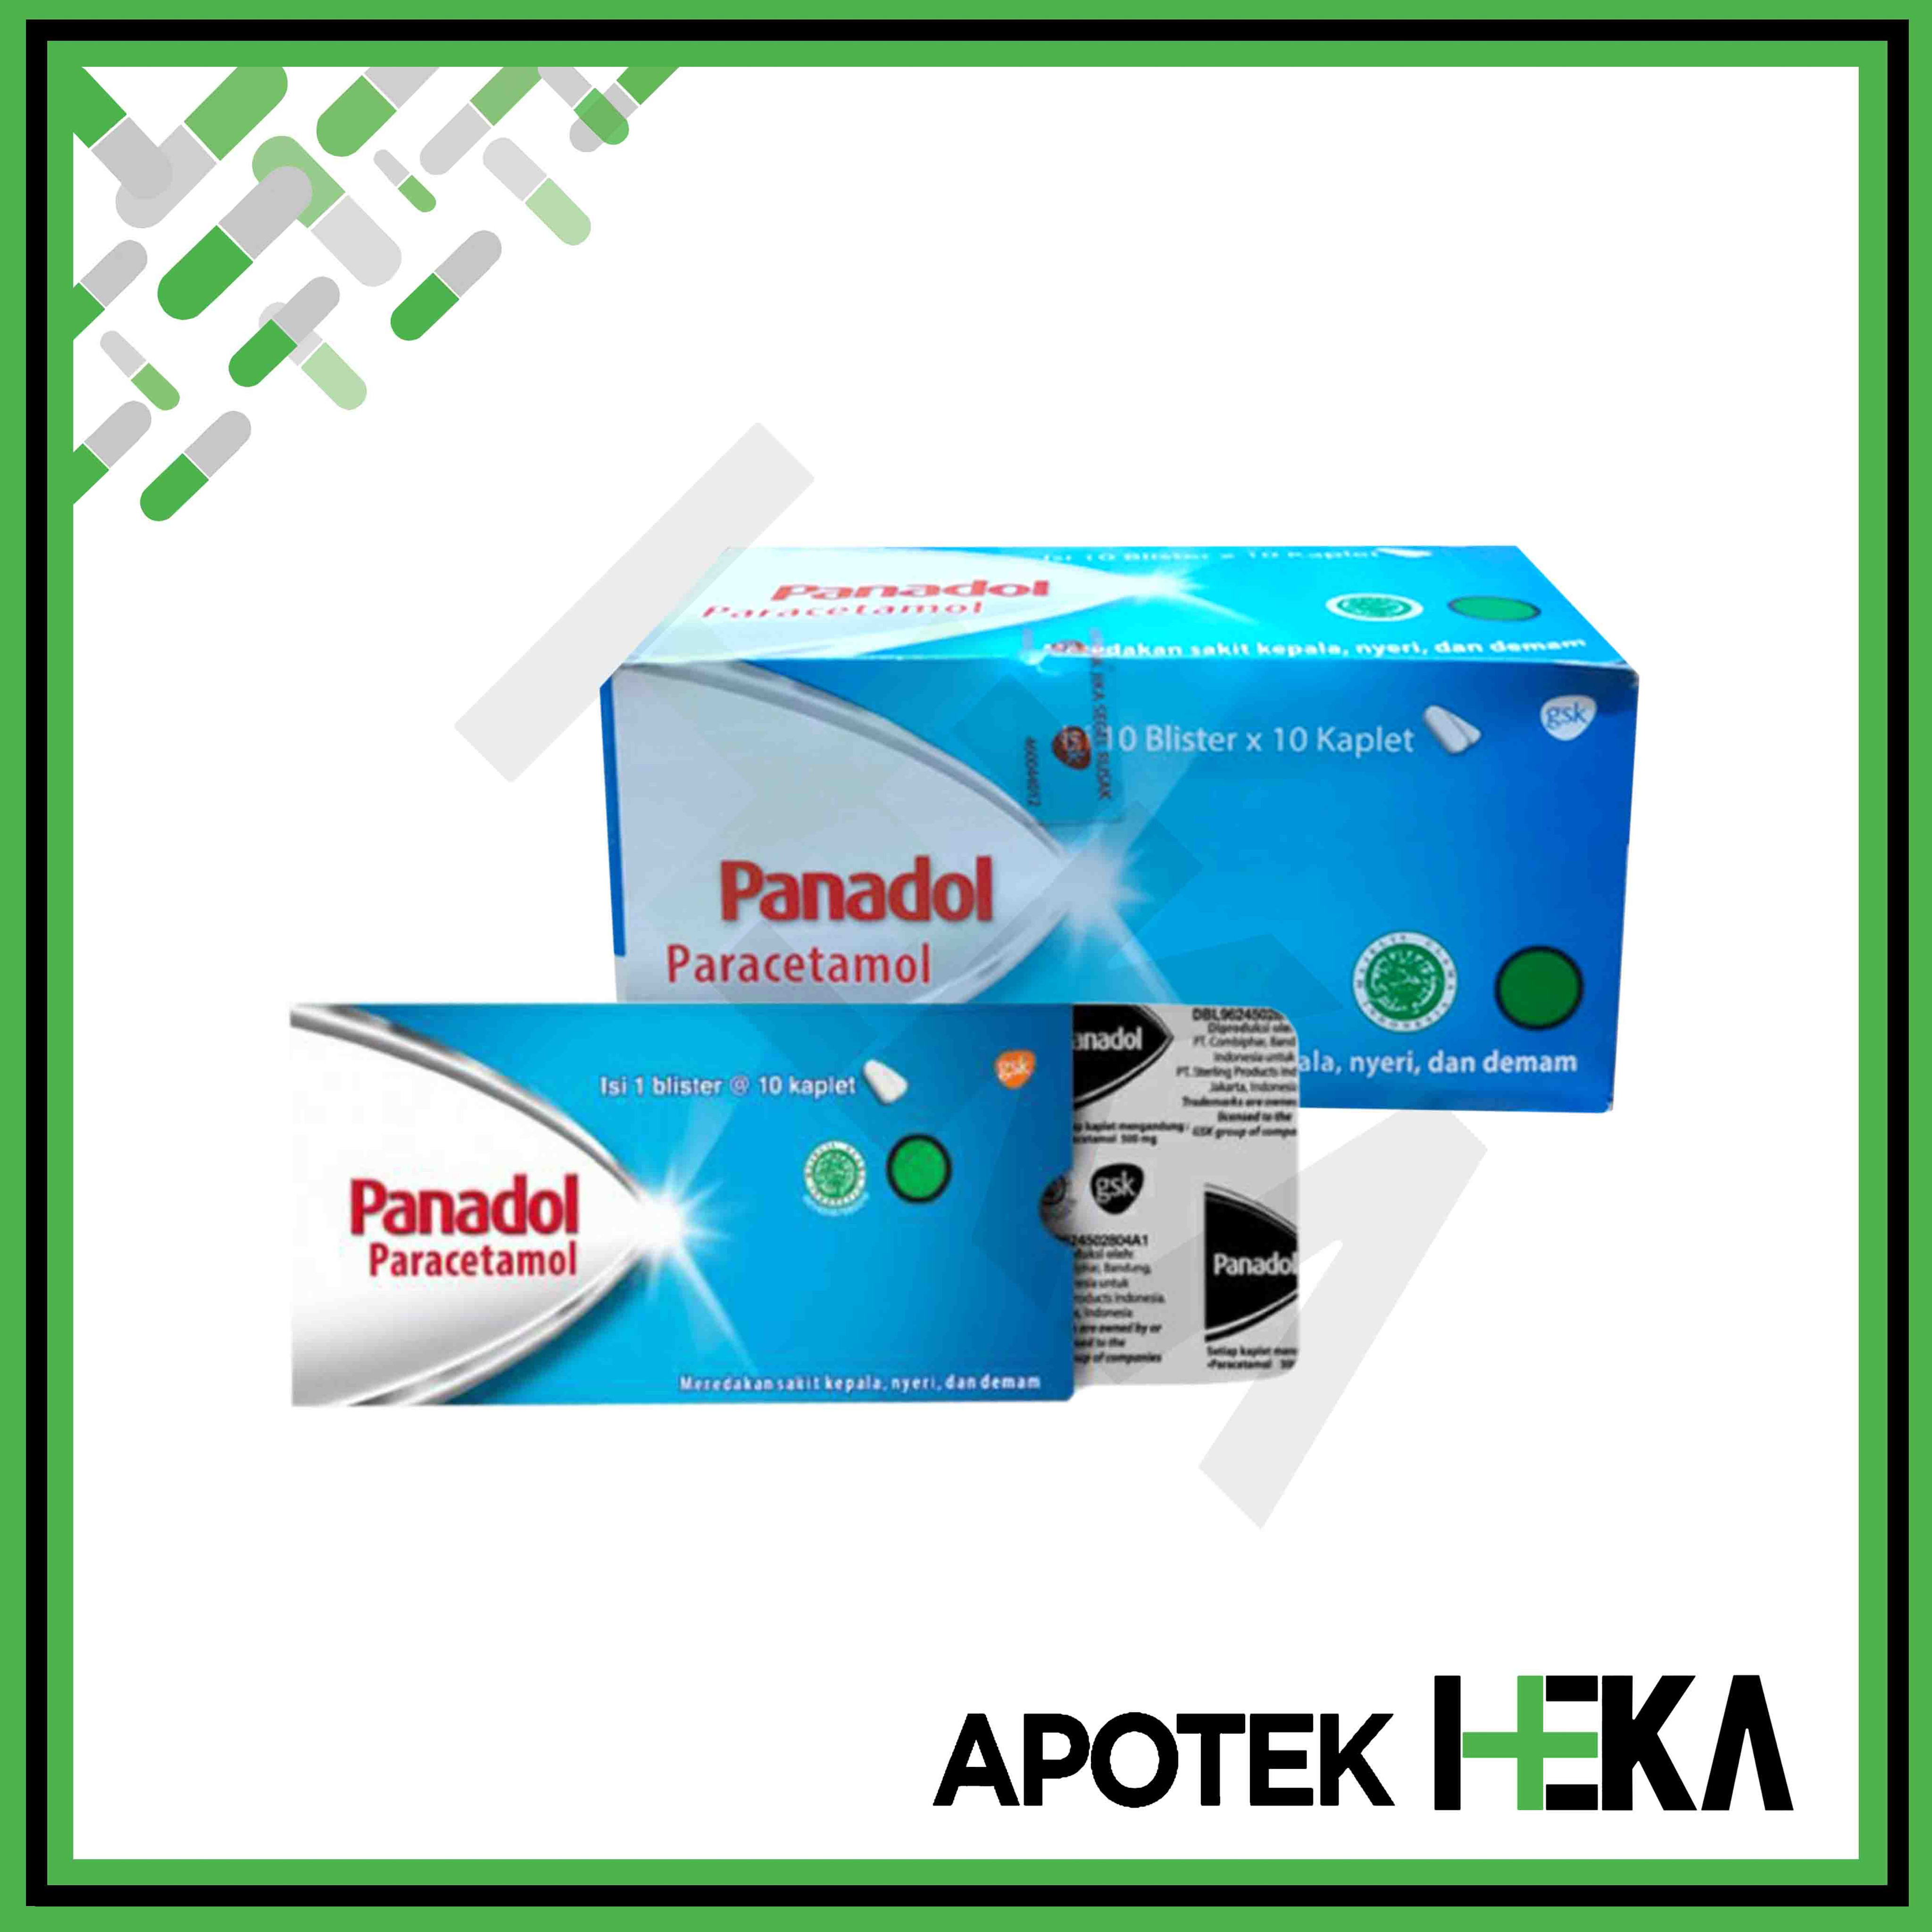 Panadol Biru Paracetamol Box isi 100 Tablet (SEMARANG)